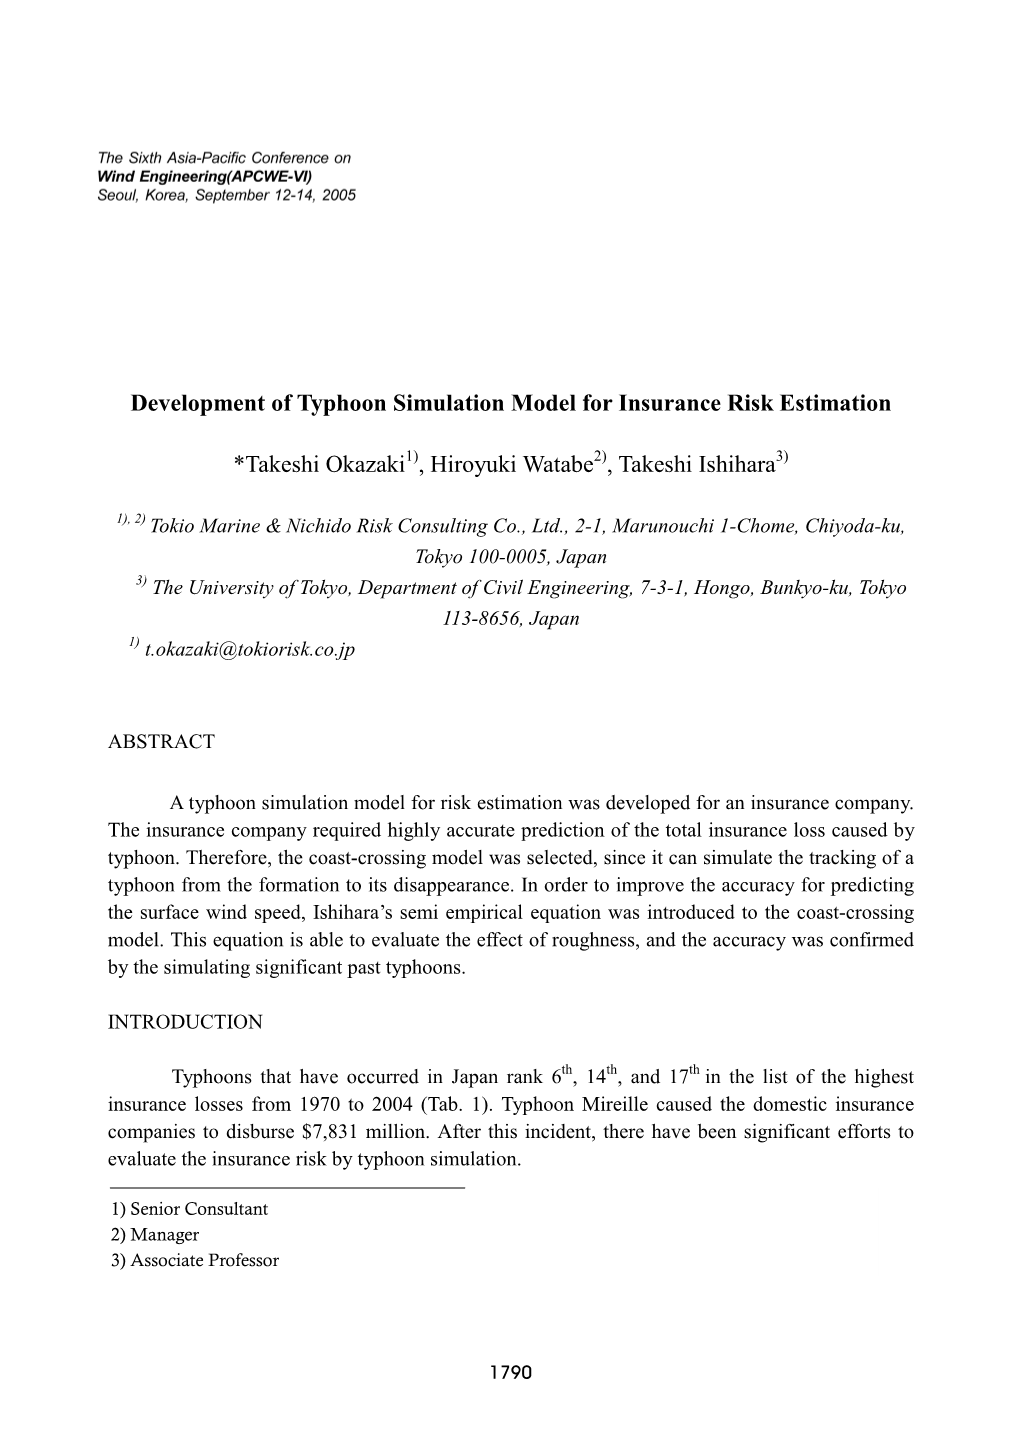 Development of Typhoon Simulation Model for Insurance Risk Estimation